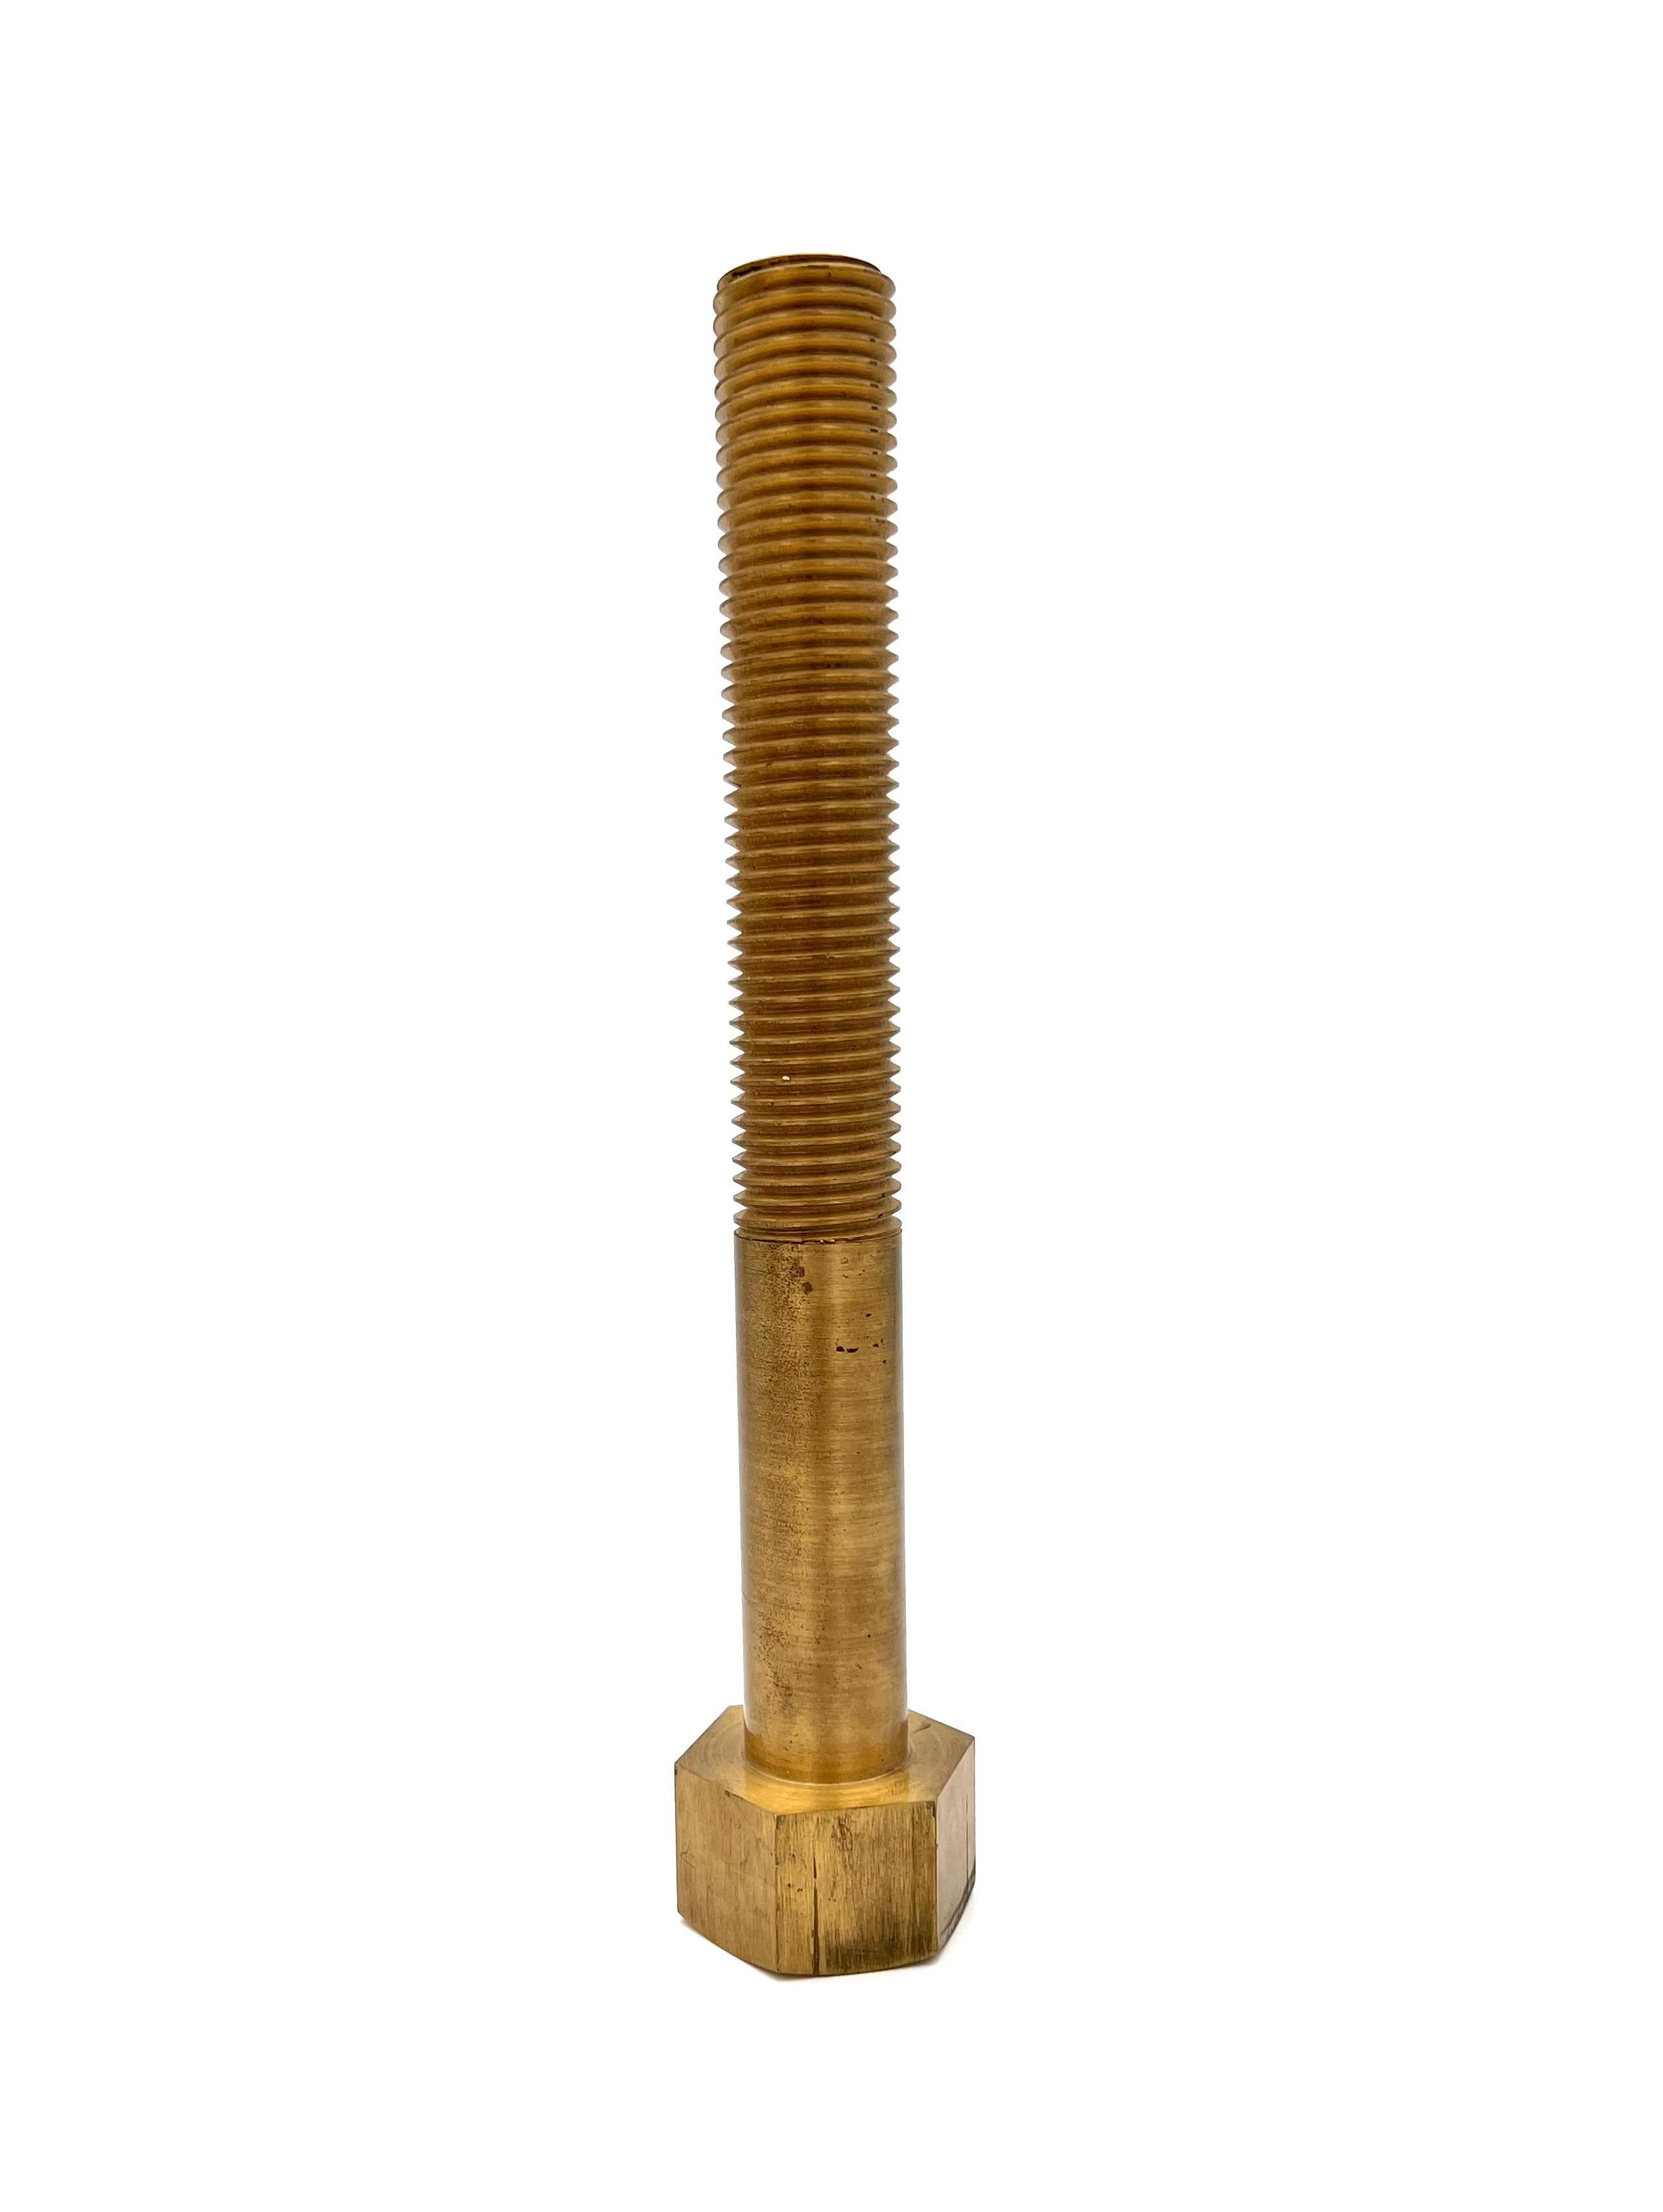 Metalwork Giant Brass Screw, Austria Mid Century Machine Age